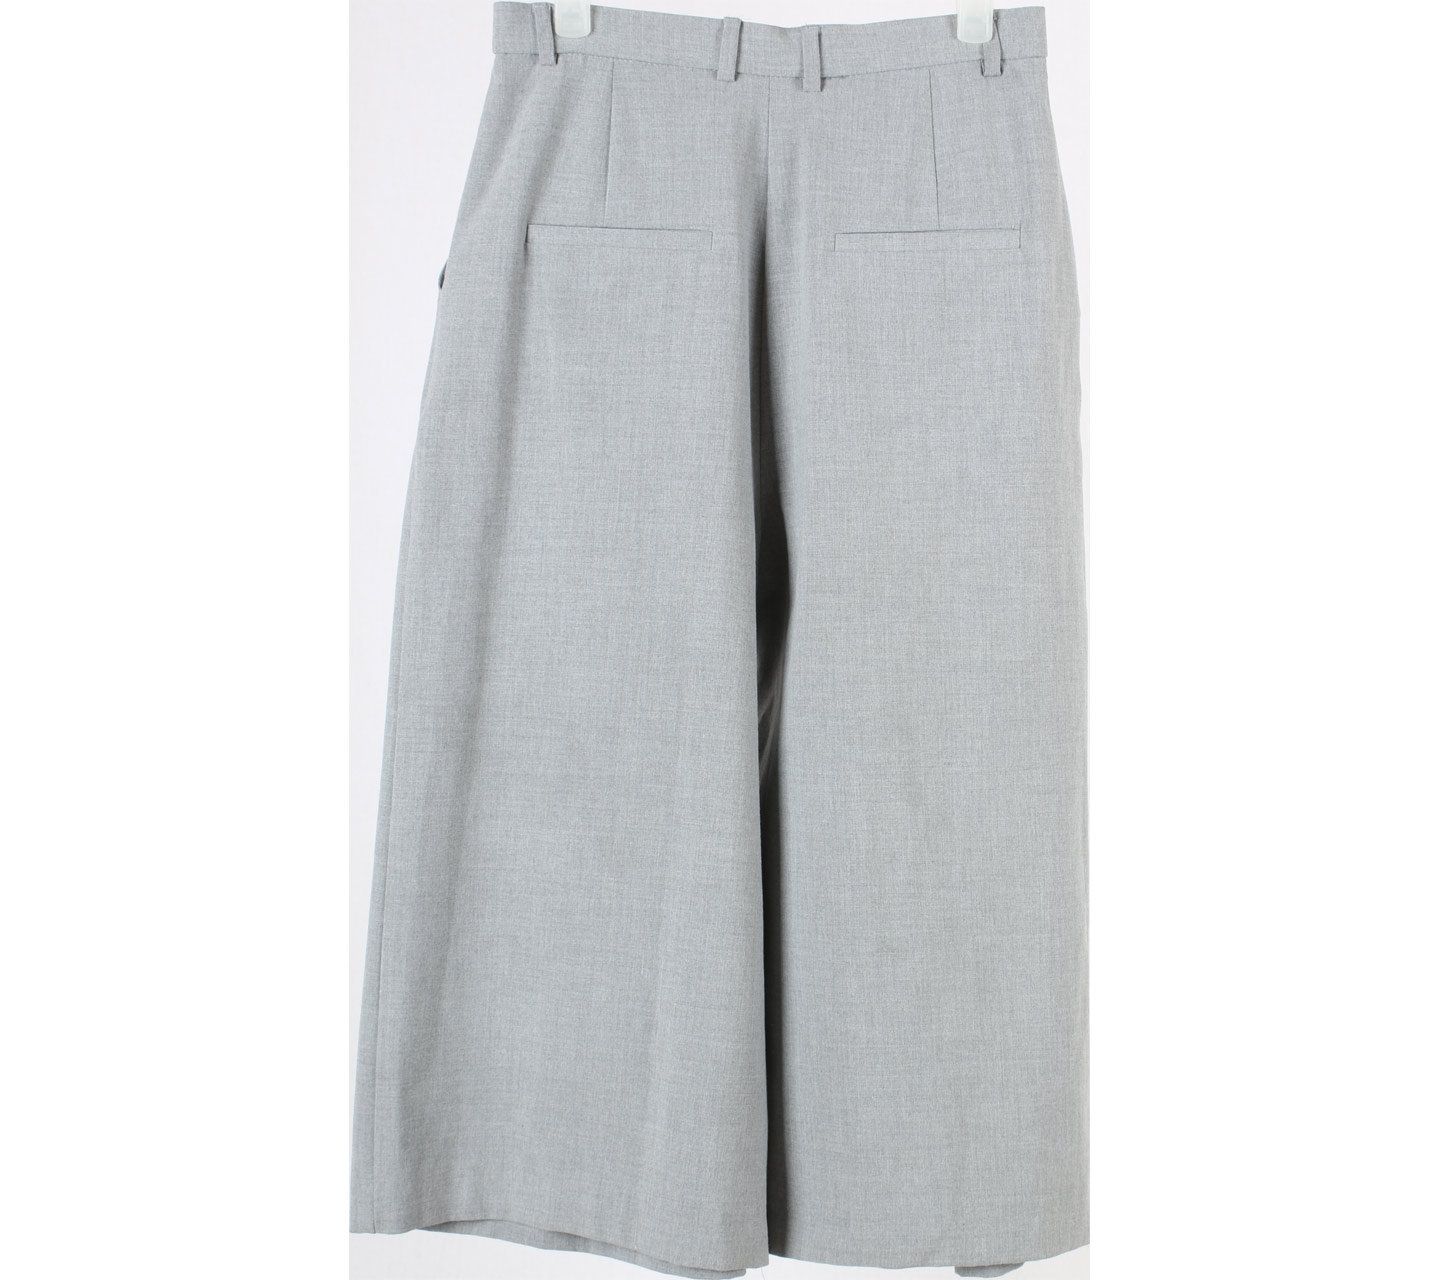 Zara Grey Culottes Pants